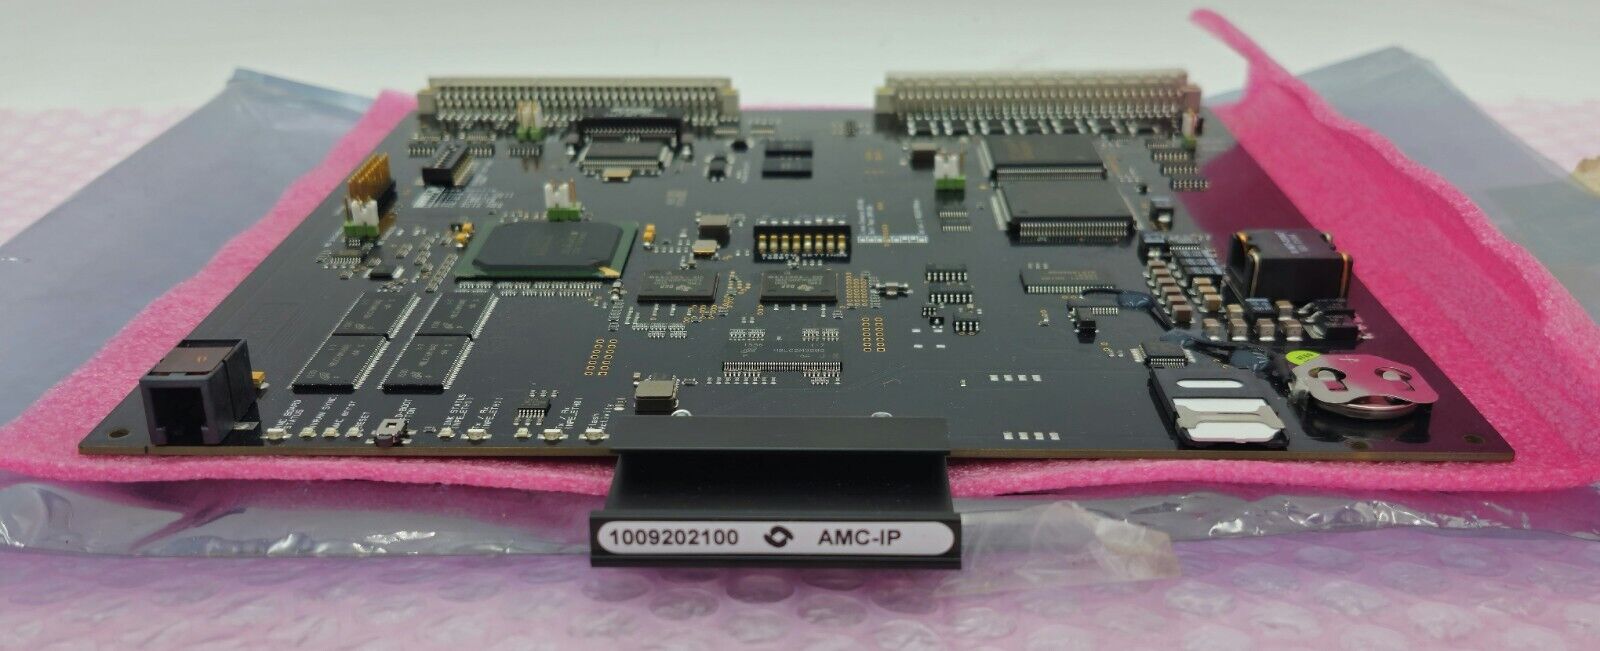 Stentofon Zenitel 1009202100 AMC-IP Processor Board